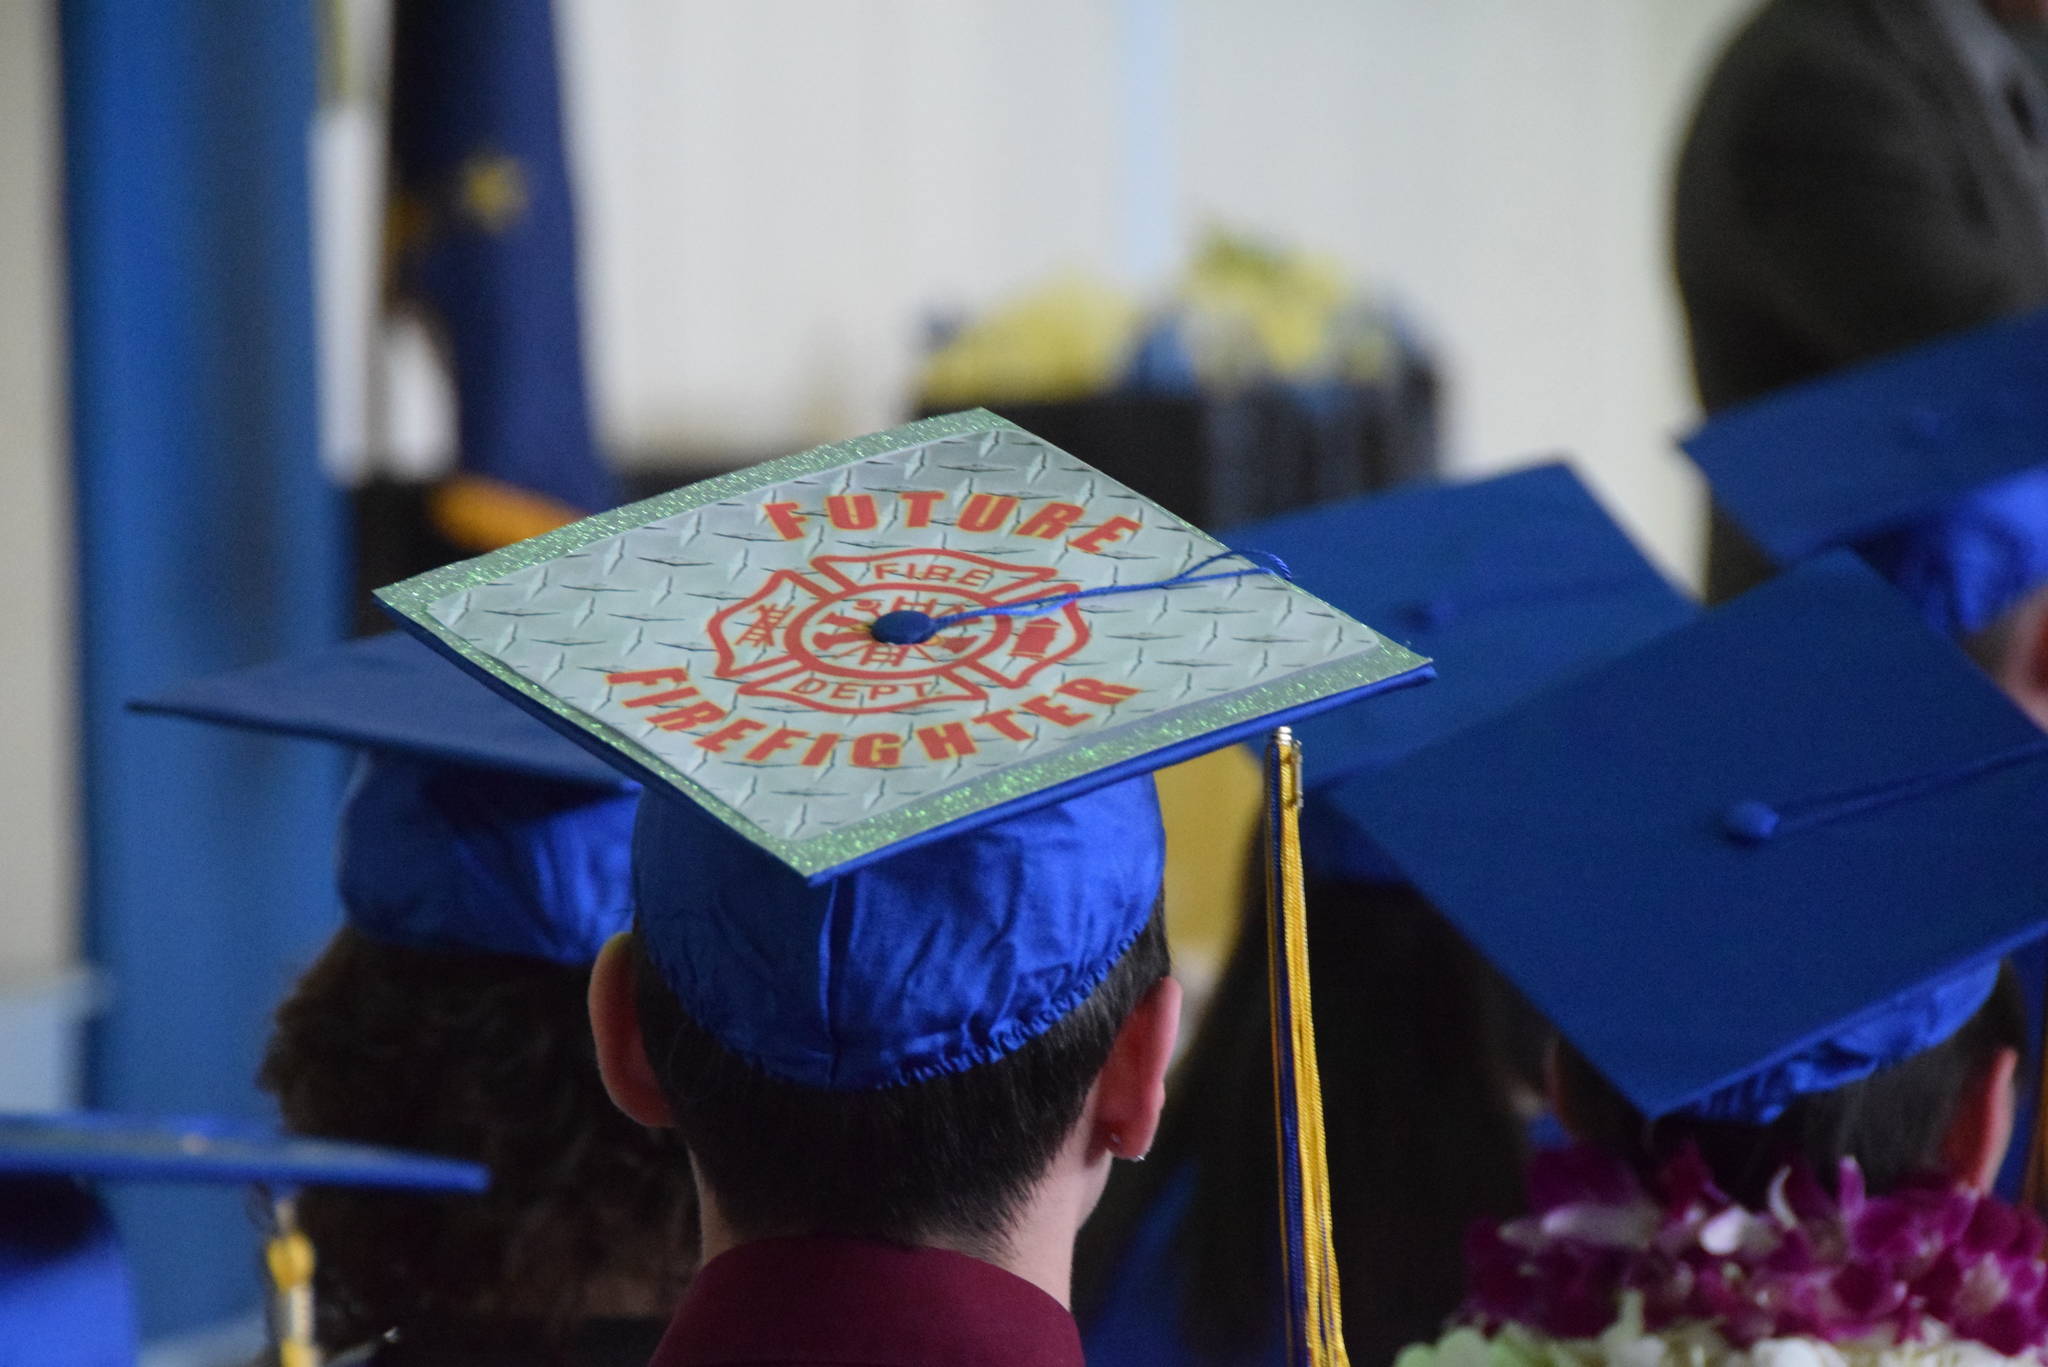 James Strianese’s custom graduation cap is seen here during the Kenai Alternative High School 2019 graduation in Kenai, Alaska on May 22, 2019. (Photo by Brian Mazurek/Peninsula Clarion)